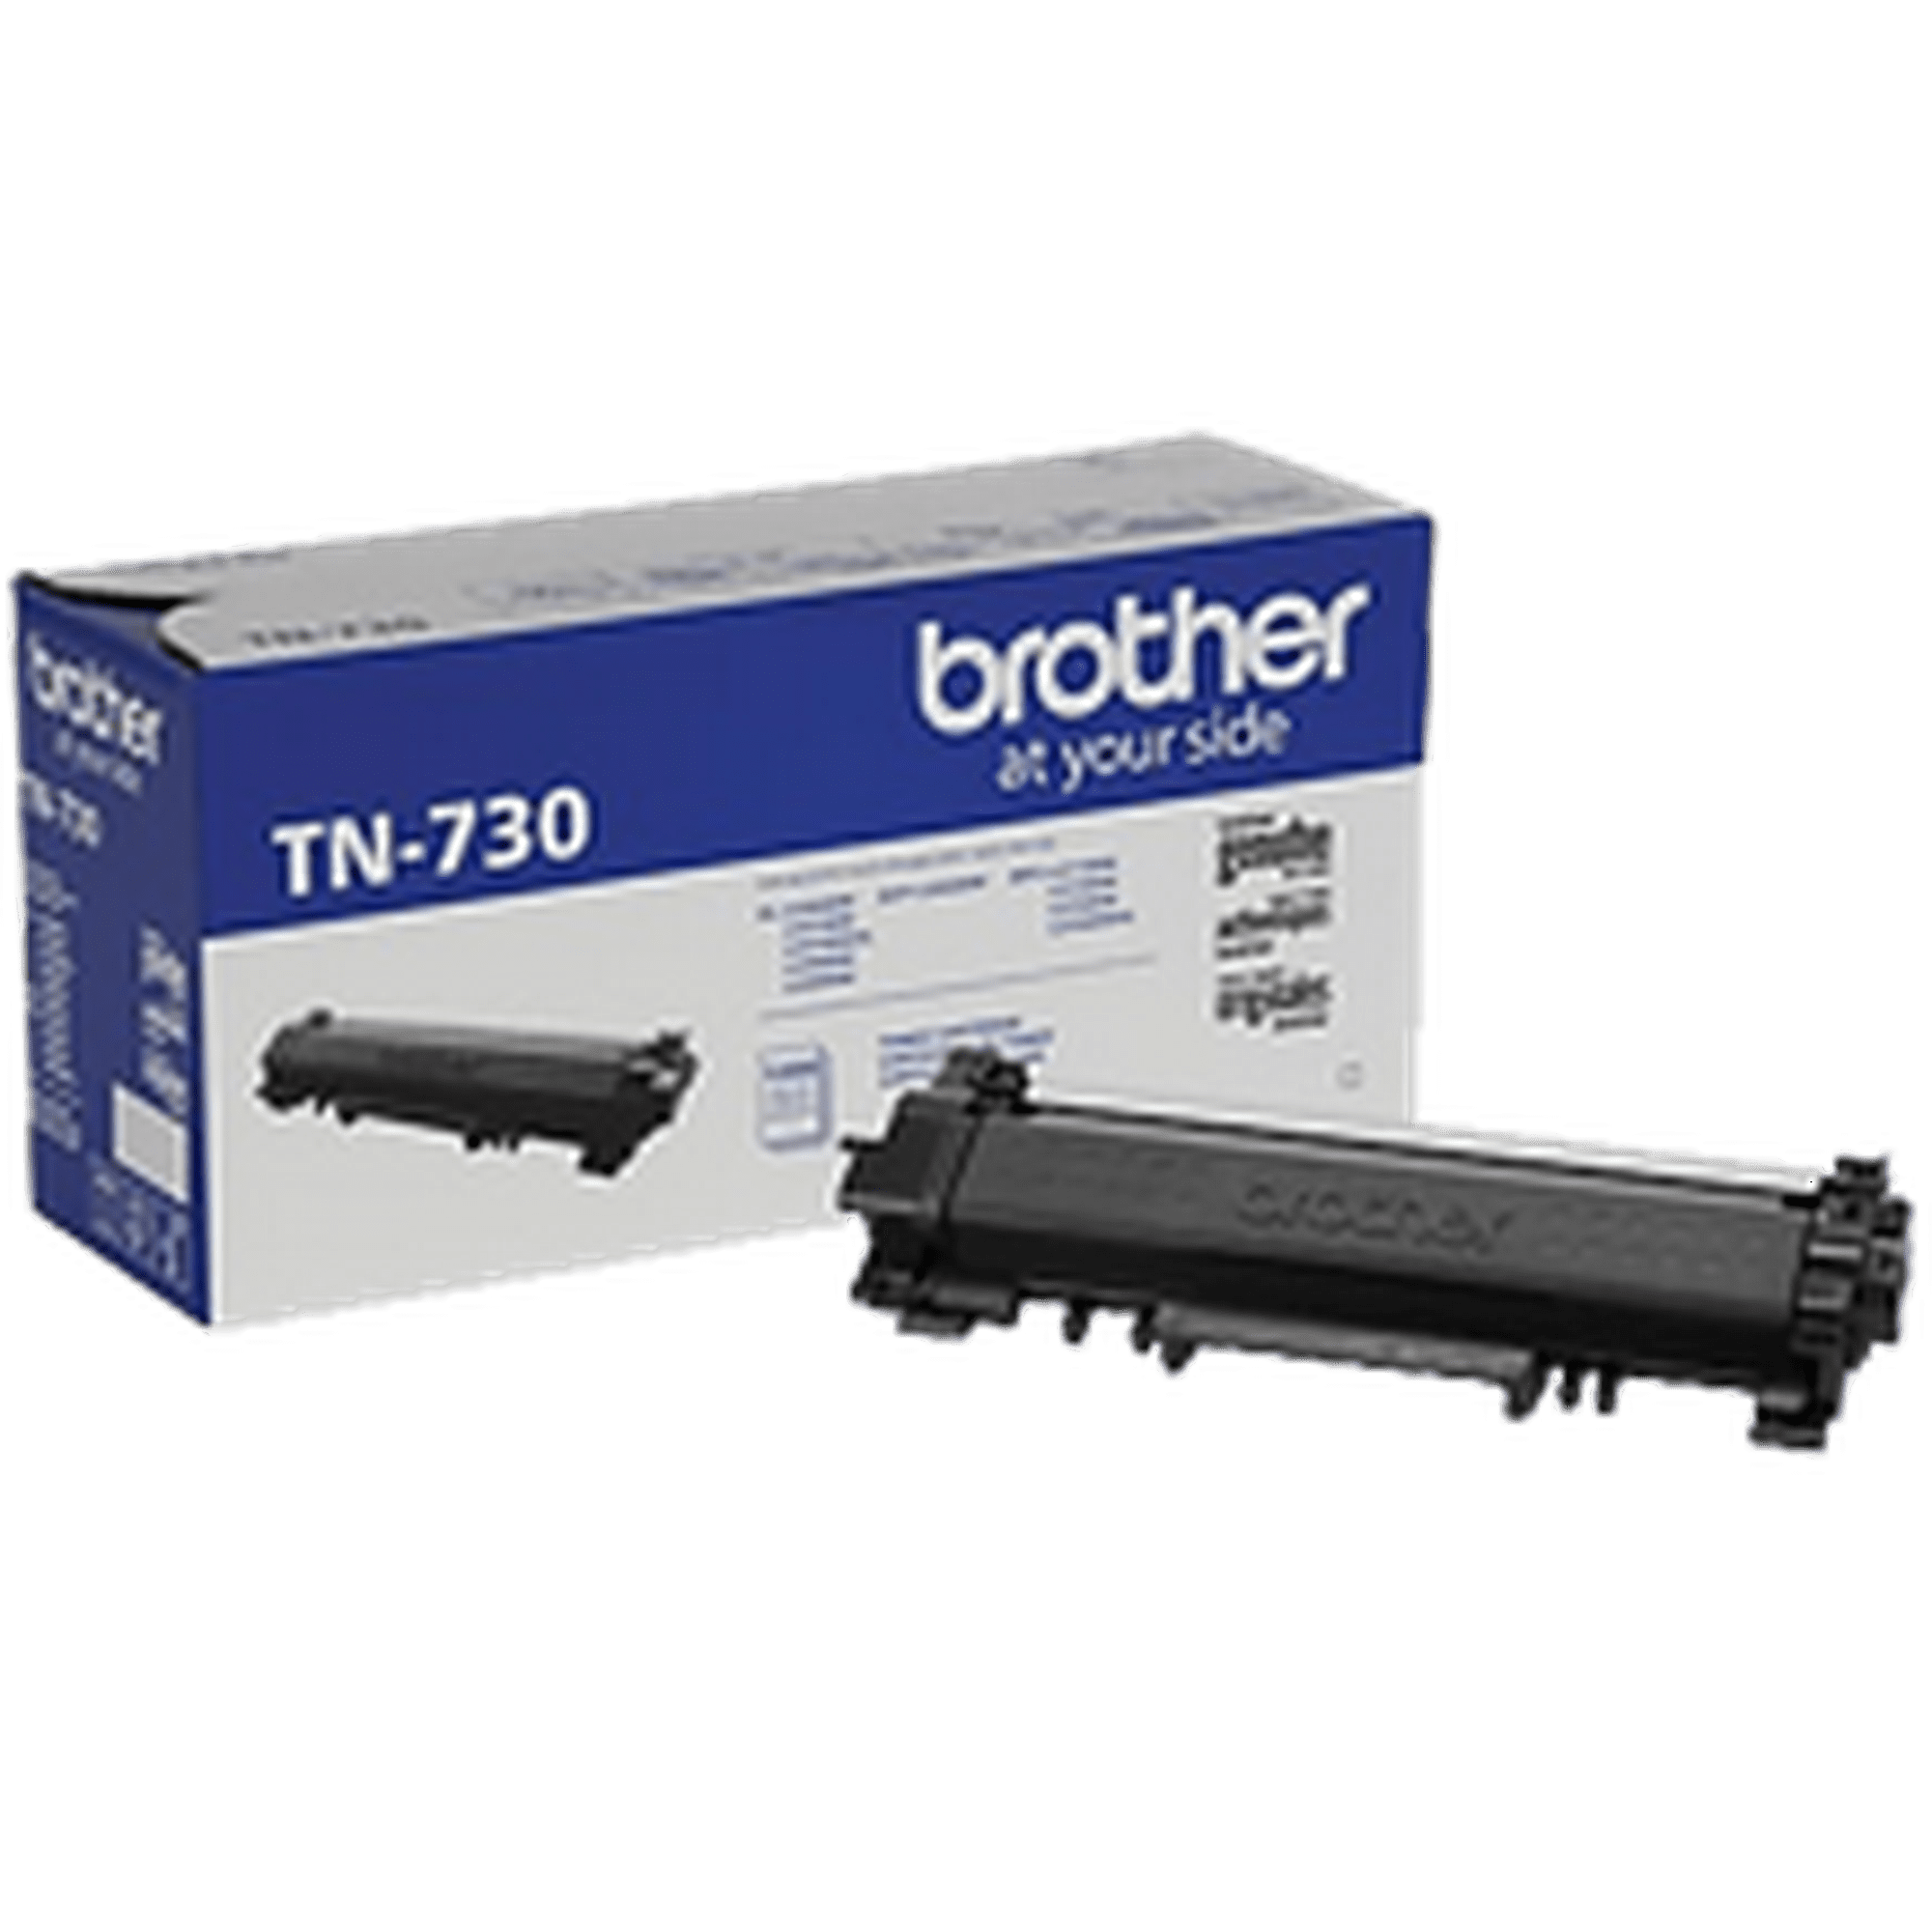 Brand Original BROTHER TN730 Laser Cartridge Black for Brother MFC -L2750DW | Walmart Canada